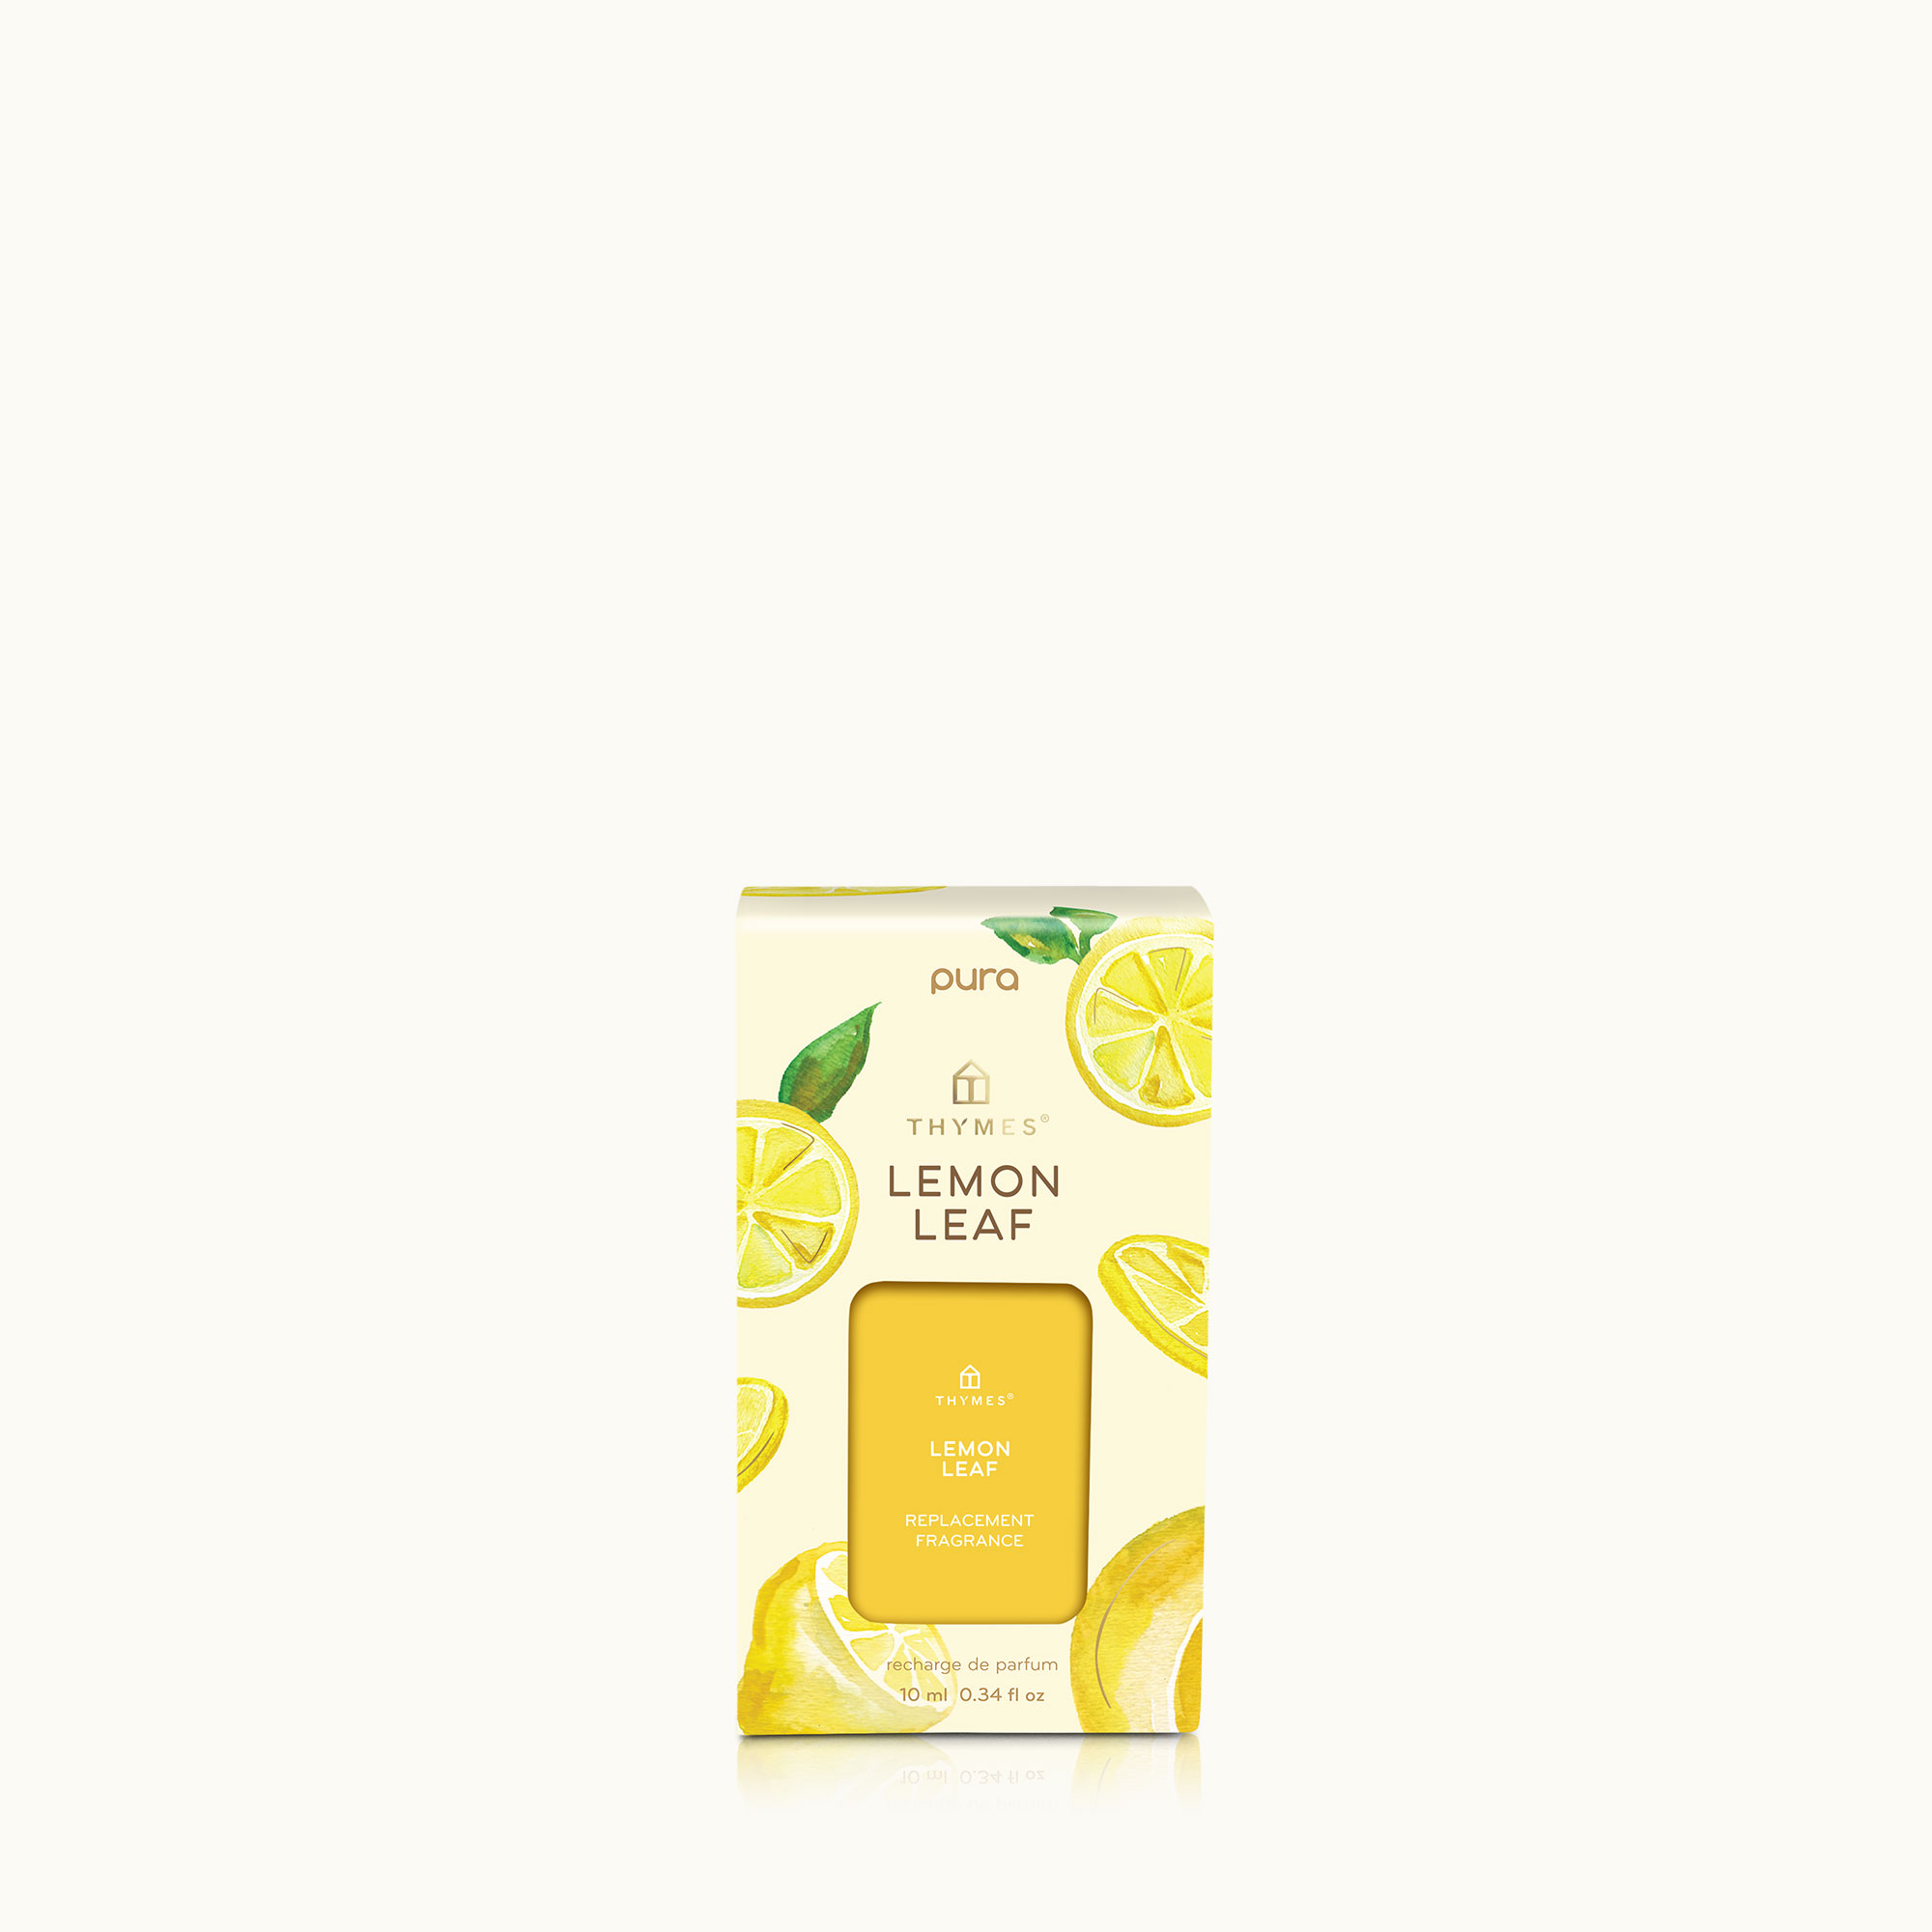 Thymes Lemon Leaf Reed Diffuser Oil Refill 7.75 oz. 